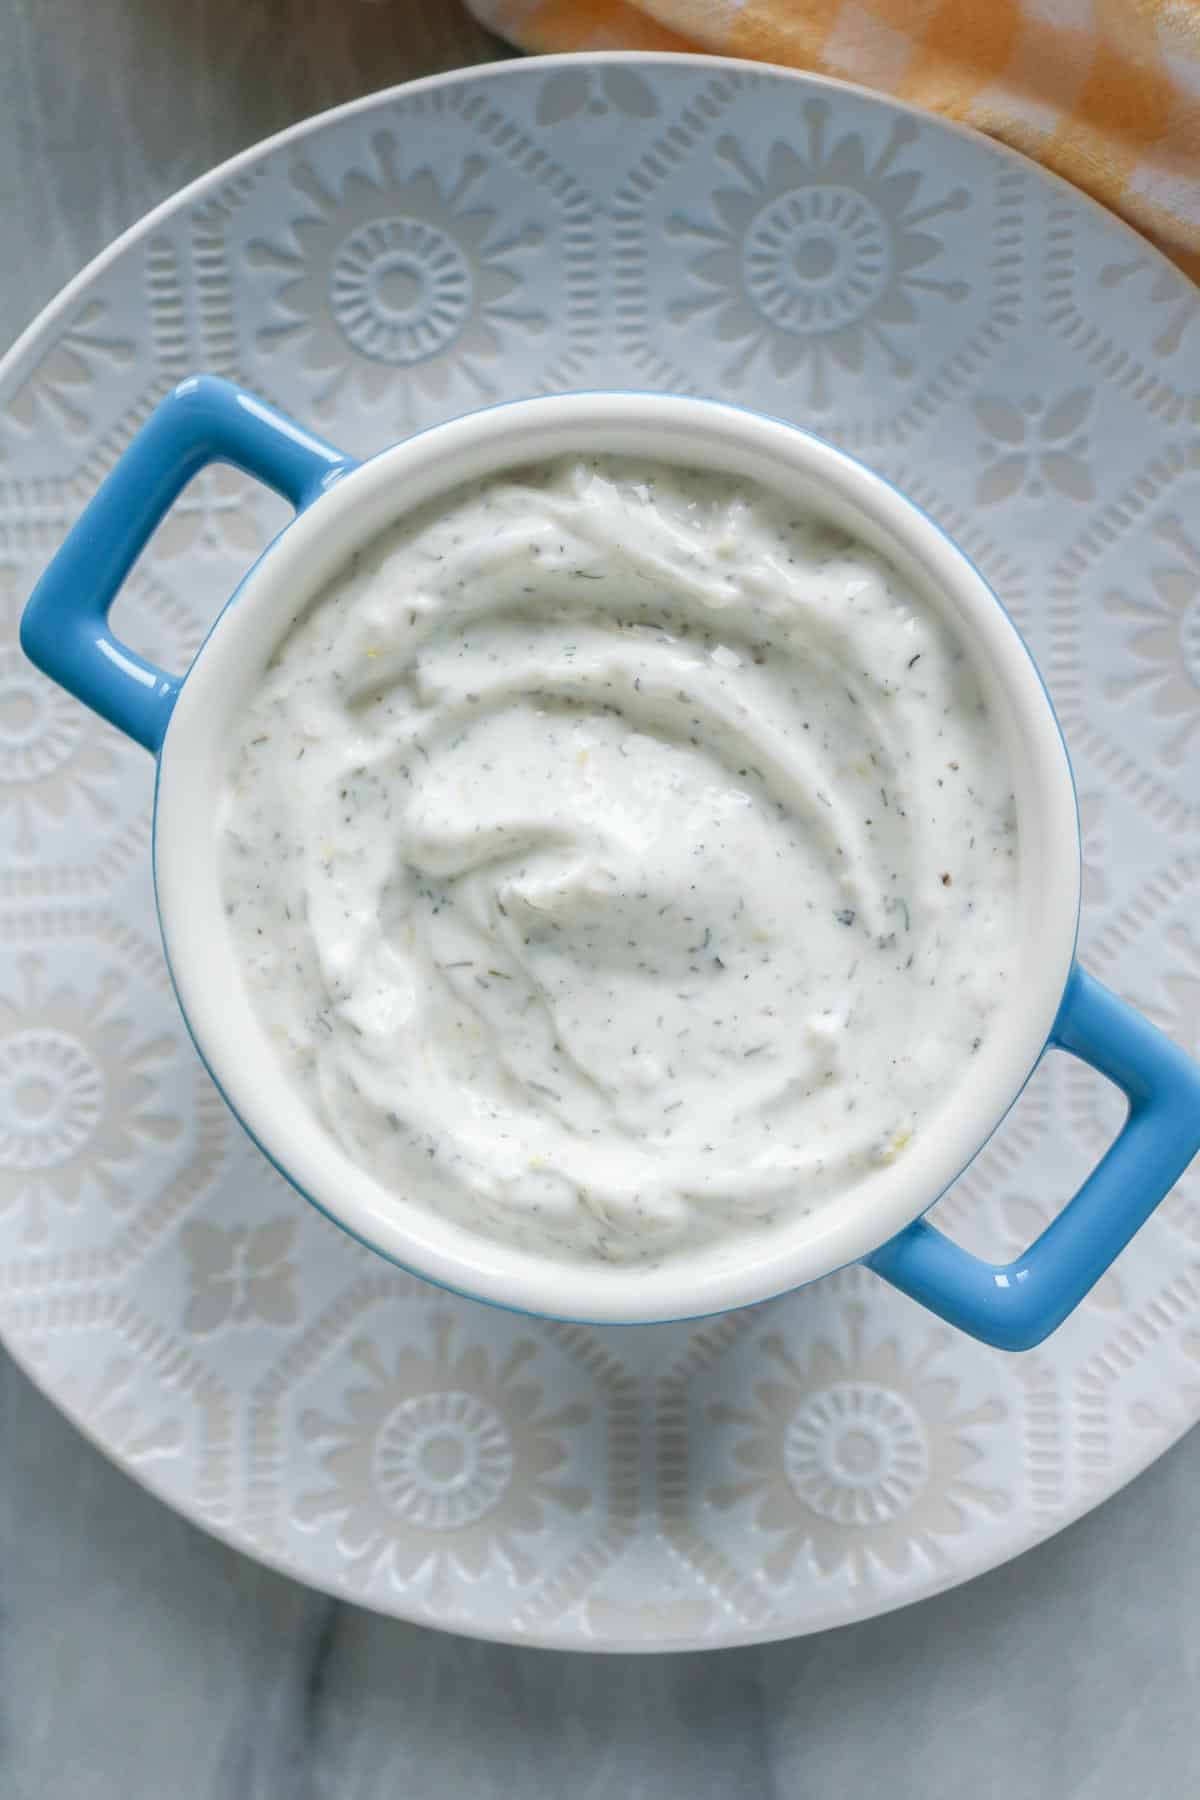 Lemon dill yogurt sauce in a serving dish.